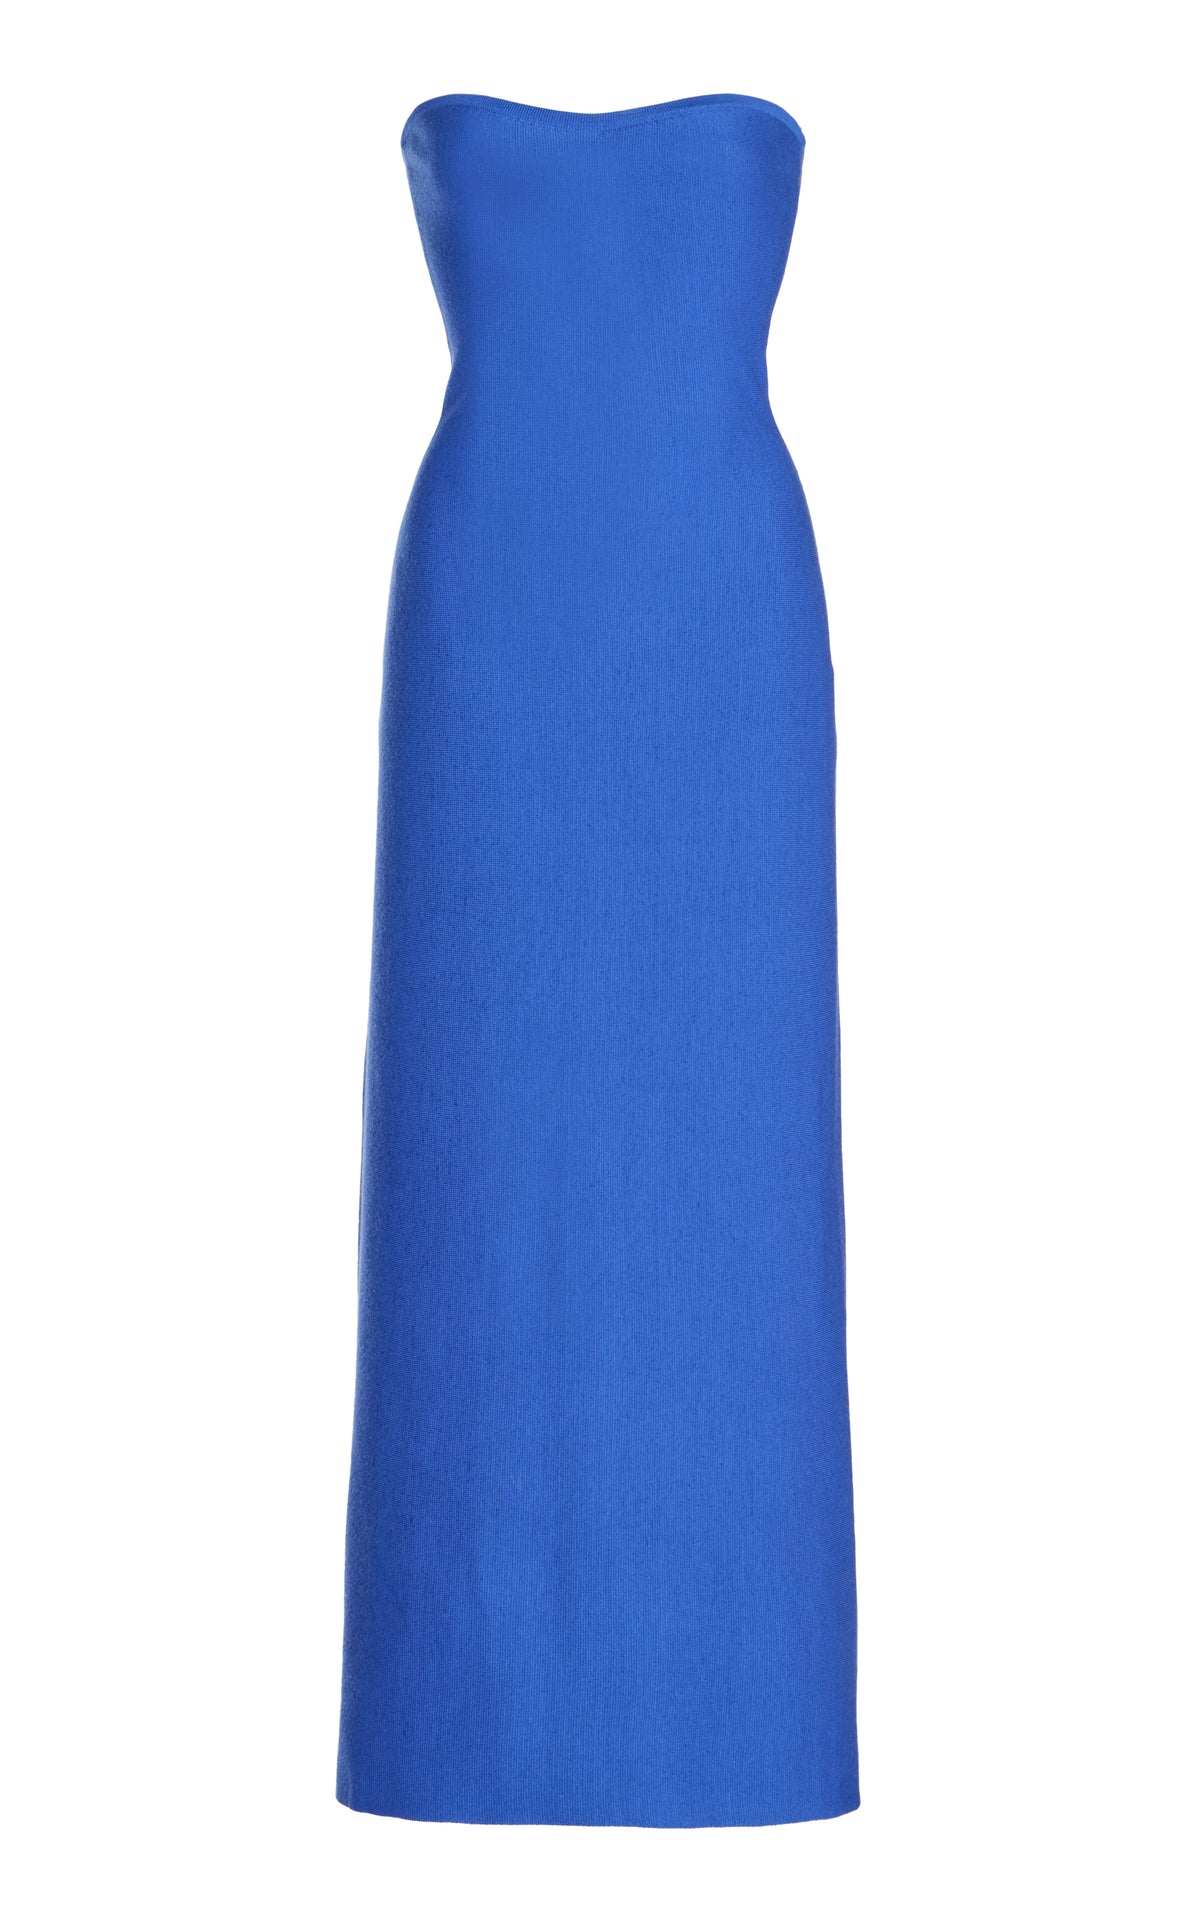 Calderon Knit Dress in Sapphire Merino Wool Cashmere